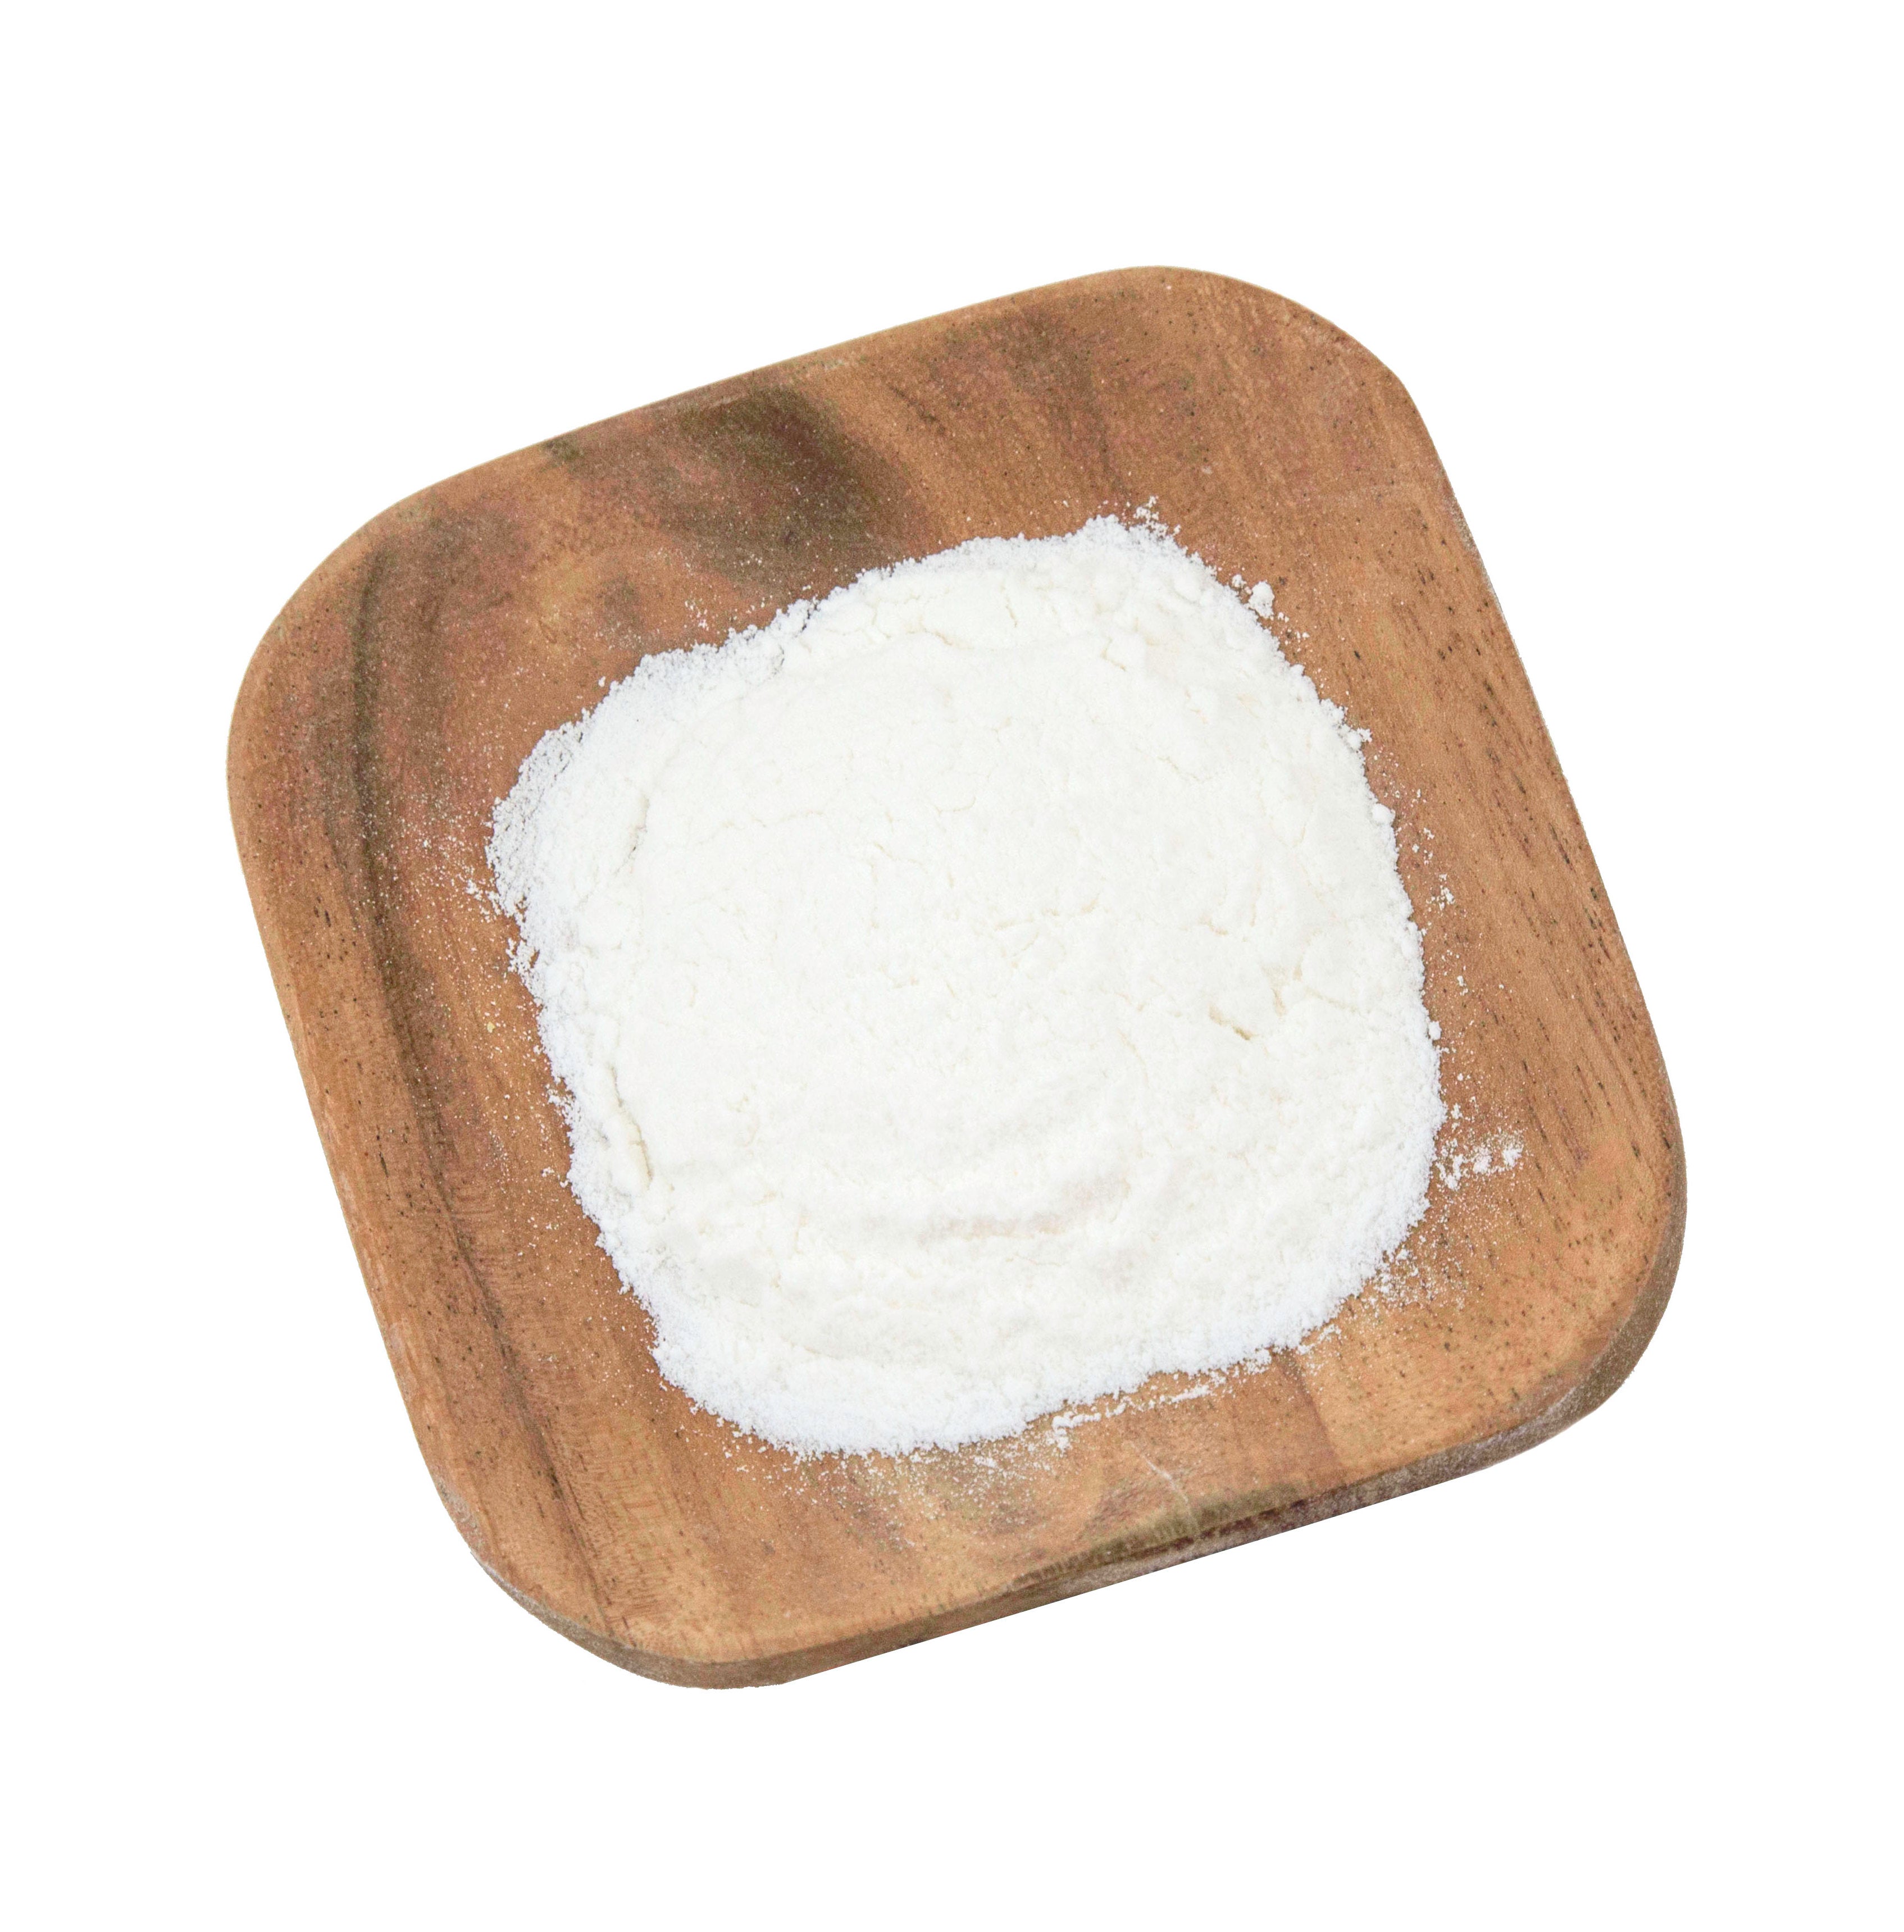 Lifestyle Markets Organic Unbleached White Flour (400g) - Lifestyle Markets